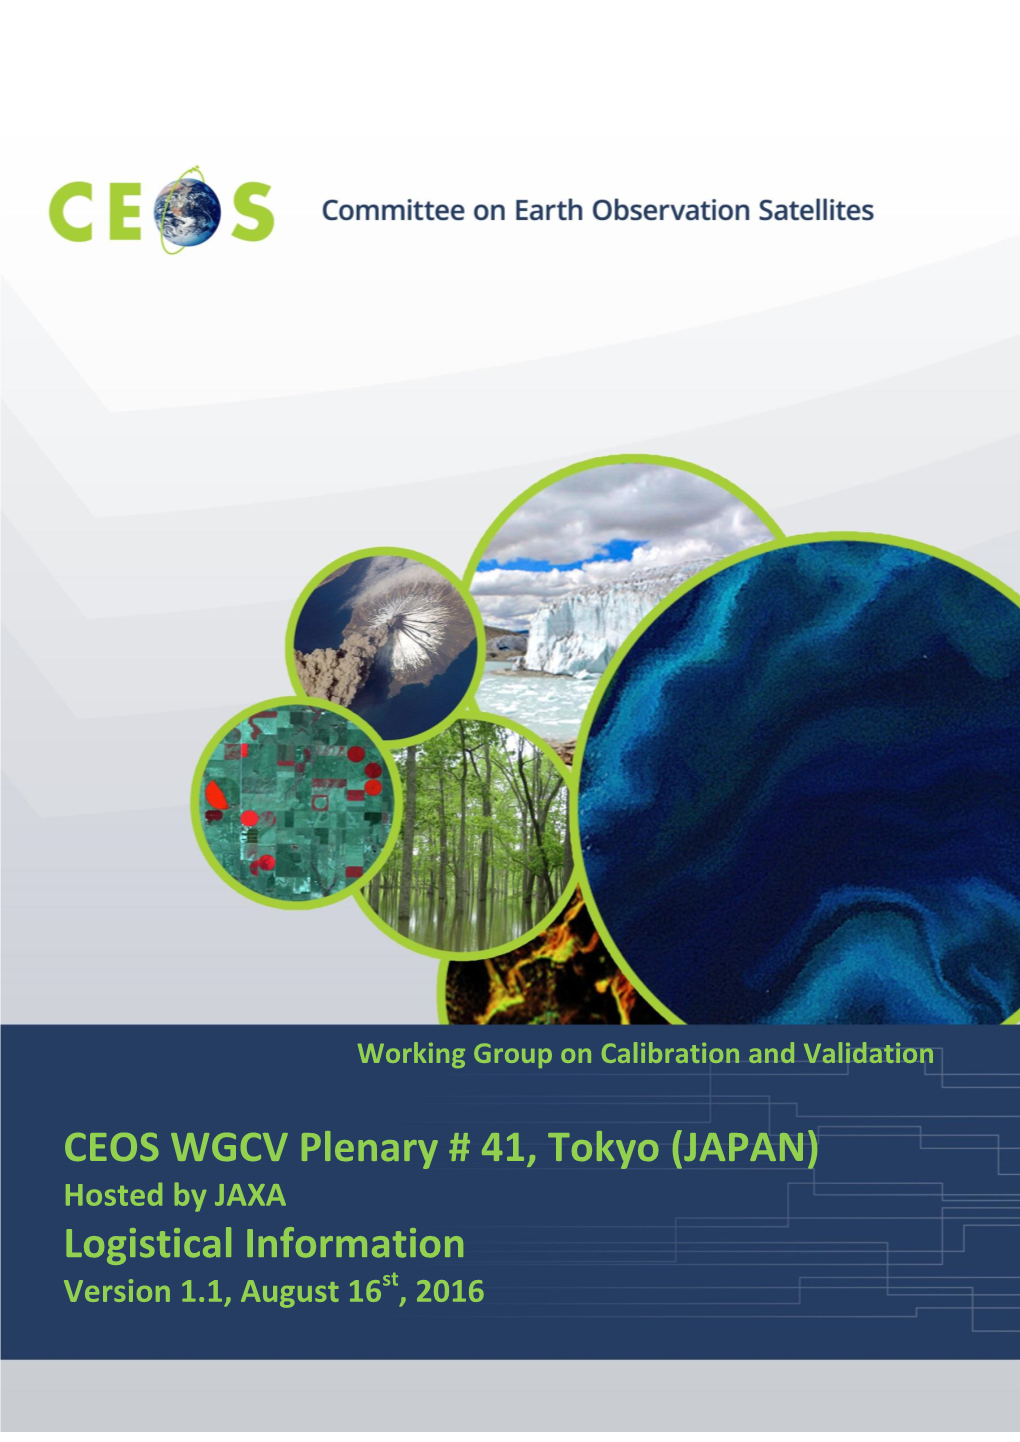 CEOS WGCV Plenary # 41, Tokyo (JAPAN) Logistical Information